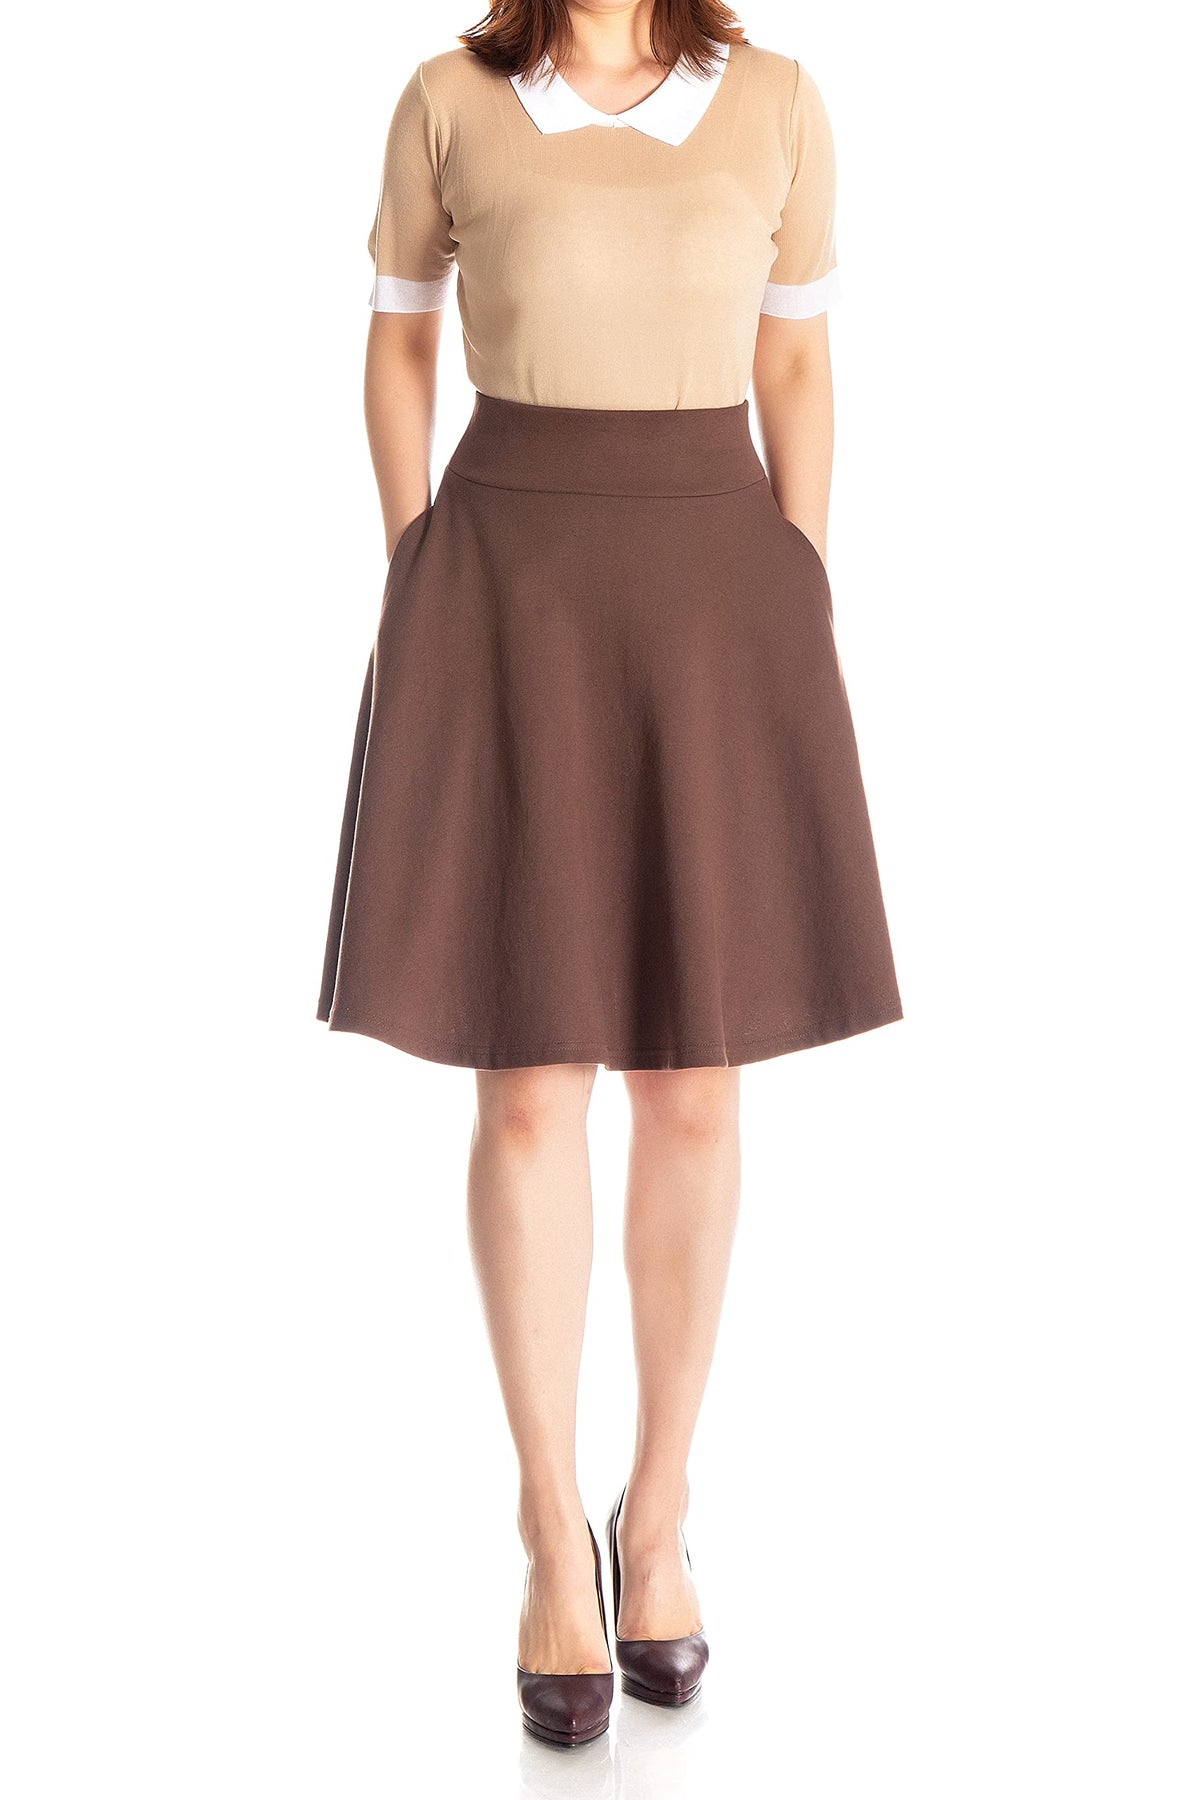 Tidy Women's Cotton Blend High Waist Aline Hidden Pockets Full Flared Circle Skater Knee Length Skirt_Brown